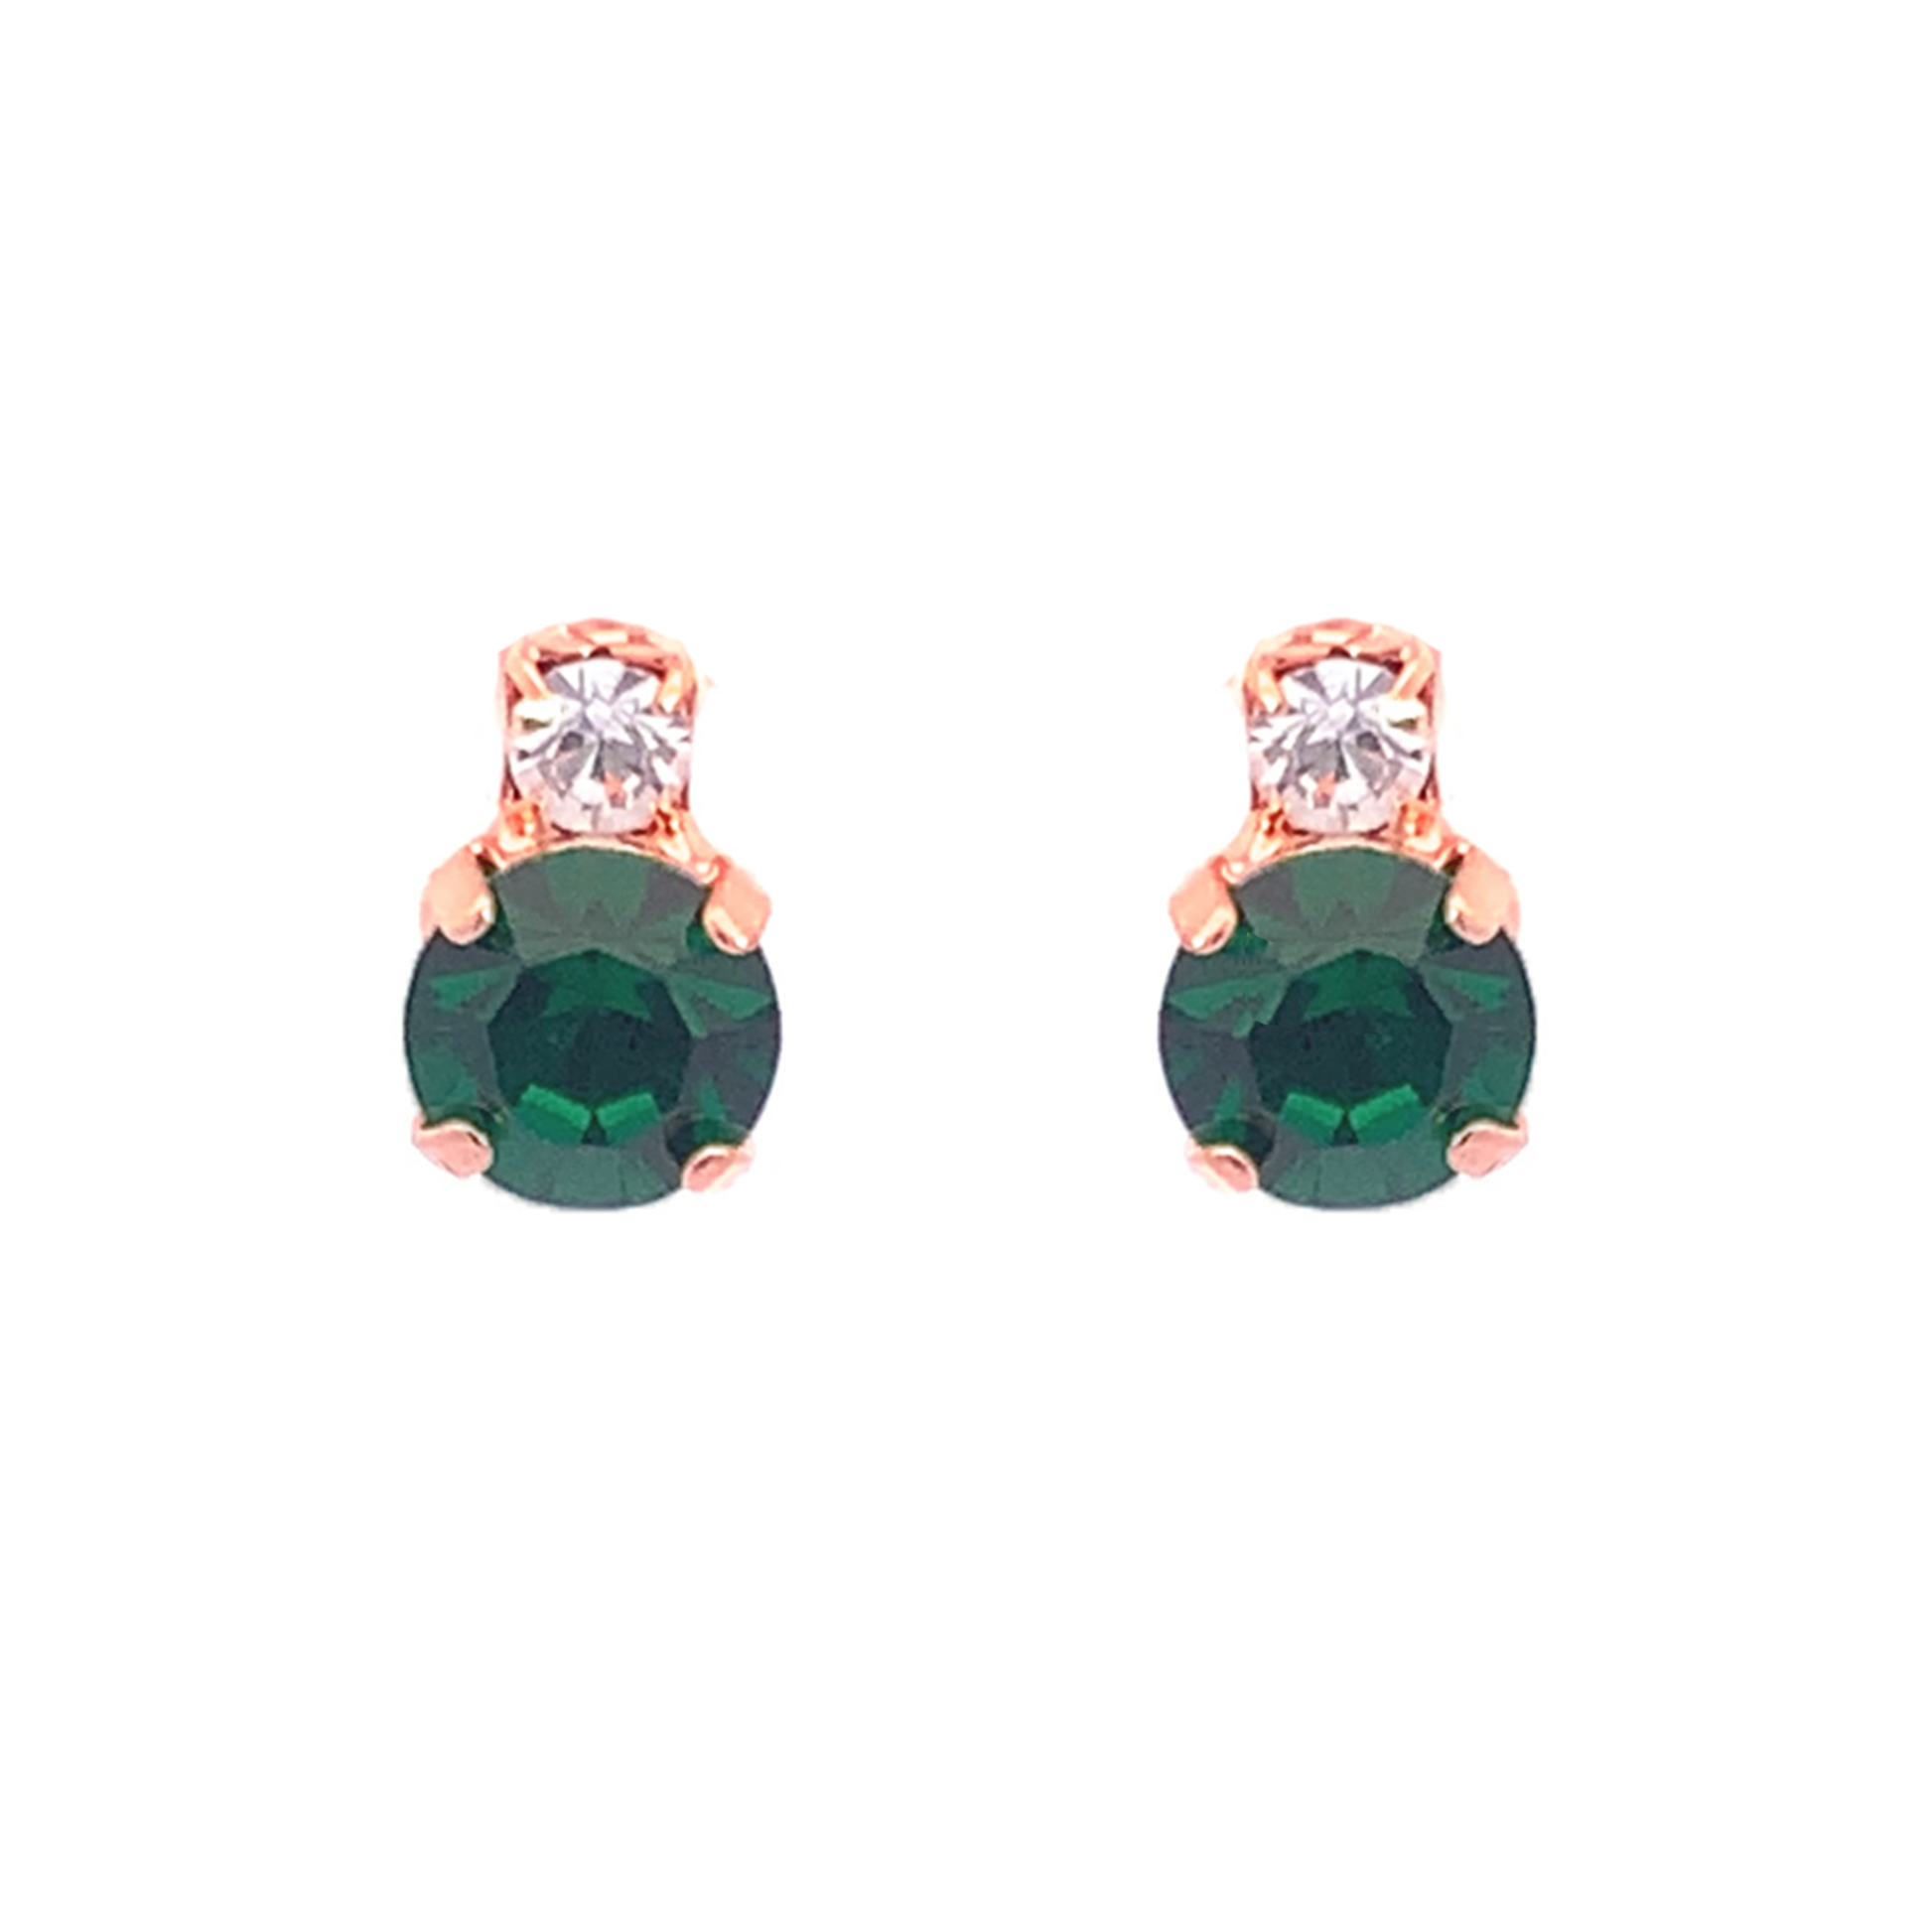 Emerald stud earrings rose gold